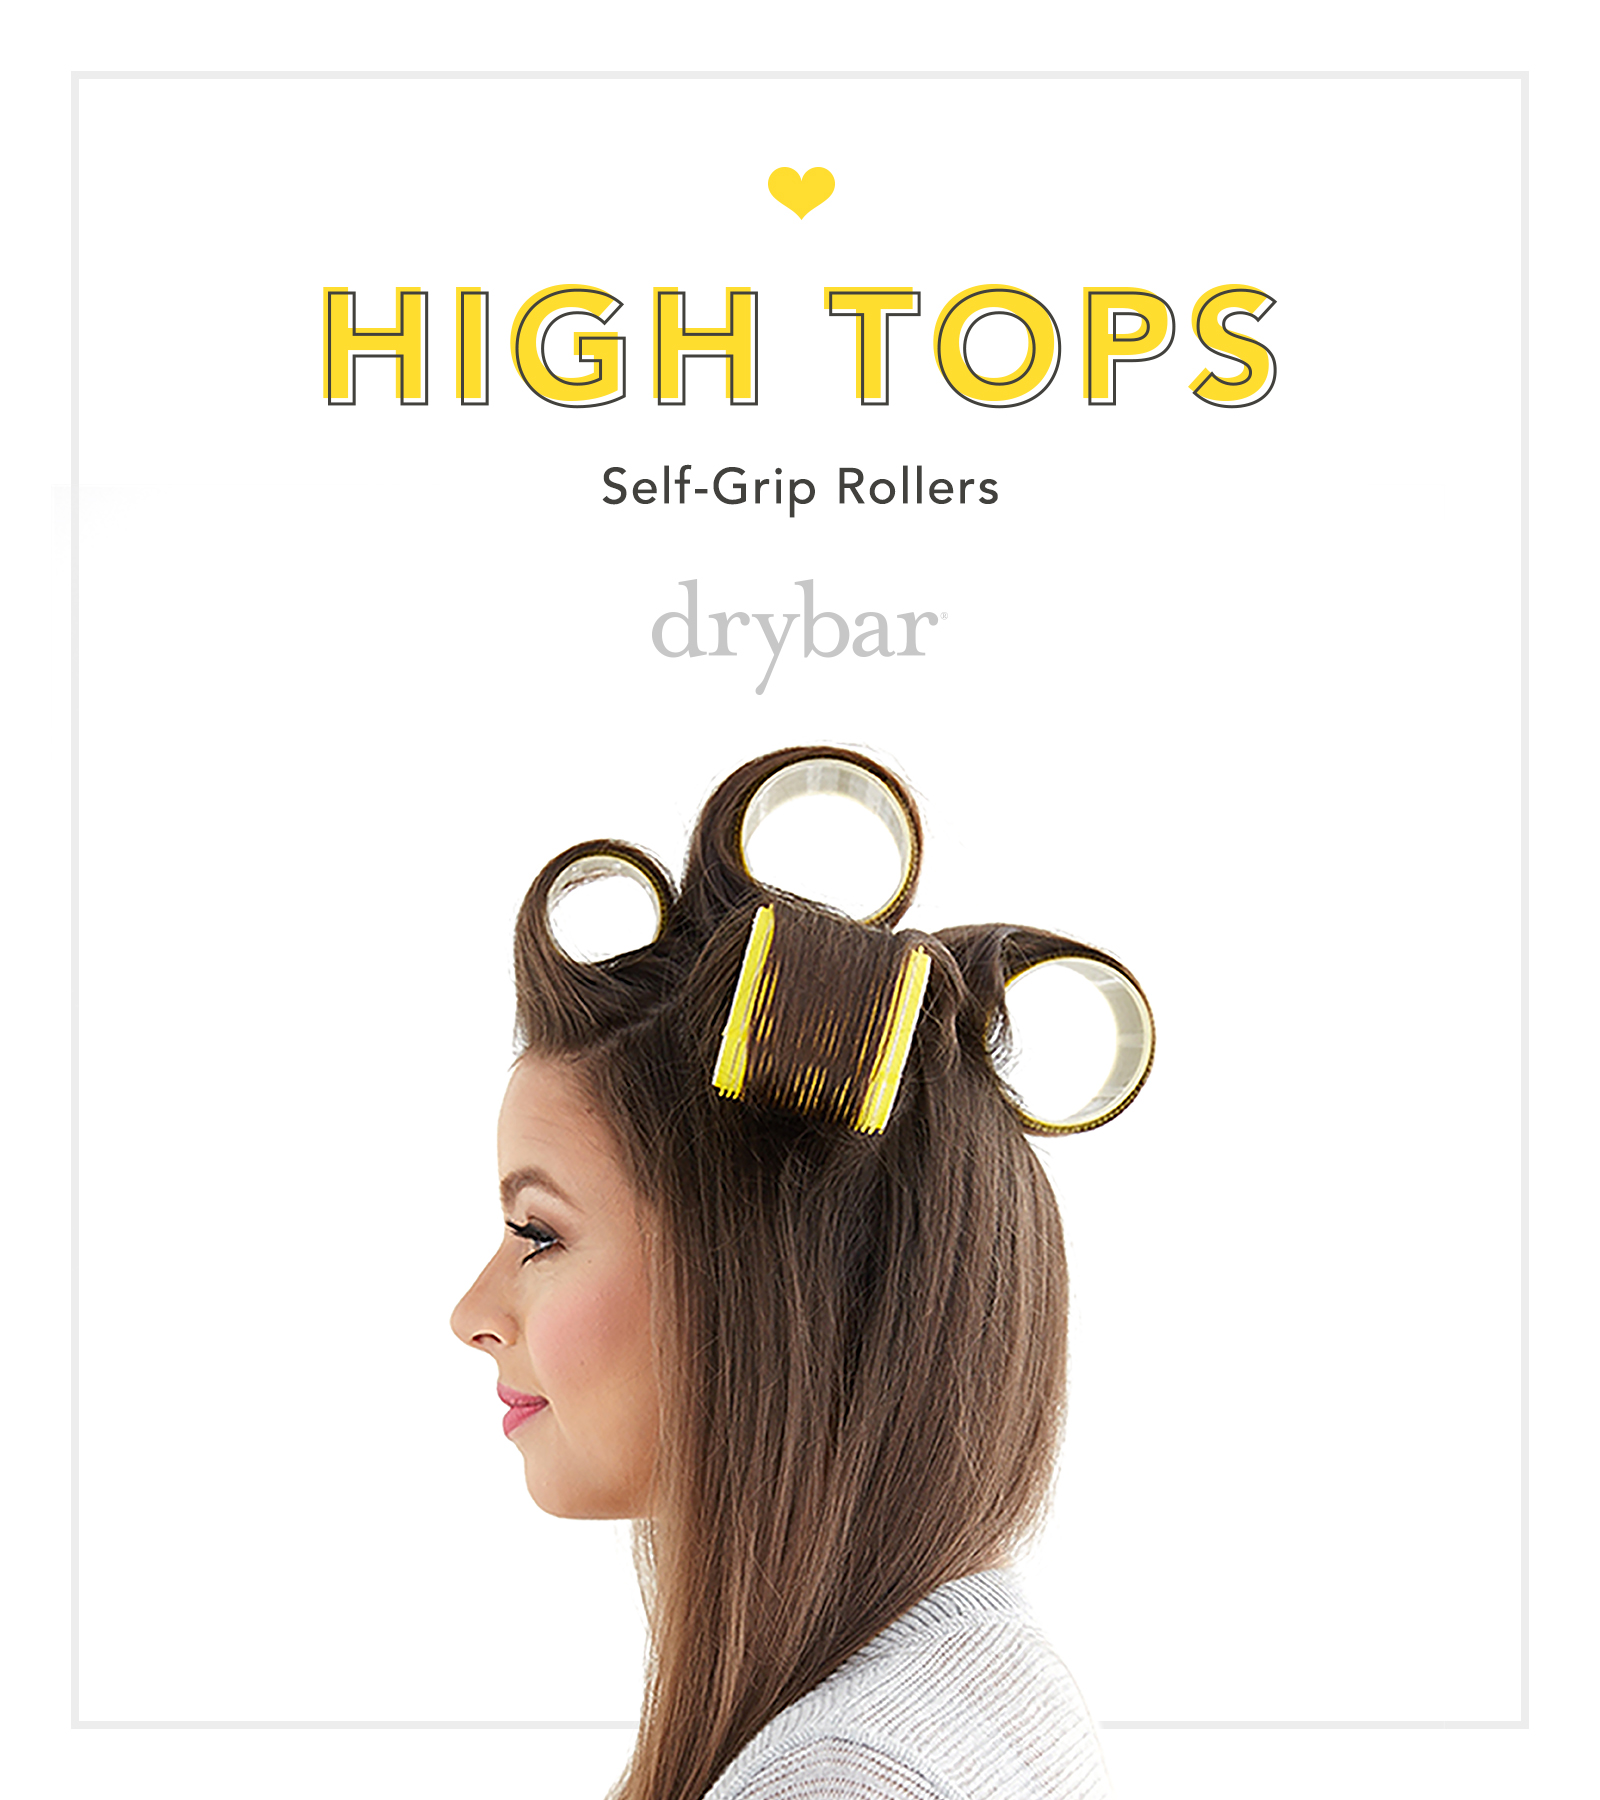 High Tops Self-Grip Rollers